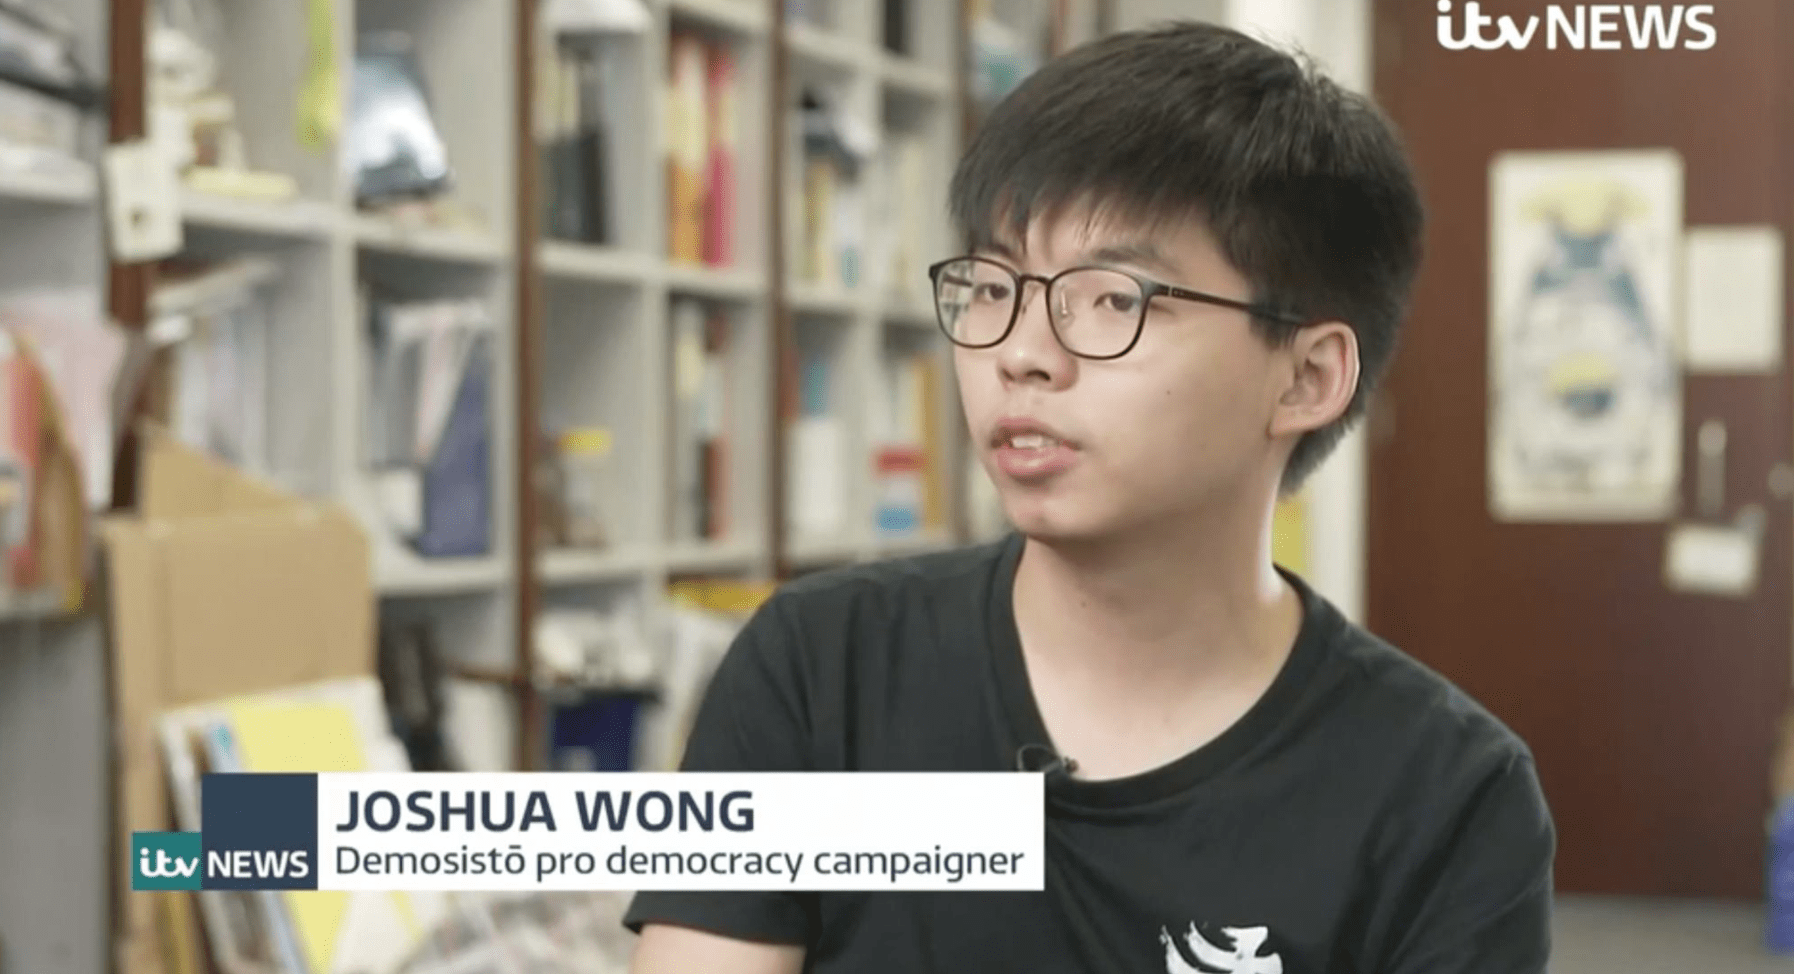 L’appello di Joshua Wong affinché l’Italia si schieri con Hong Kong